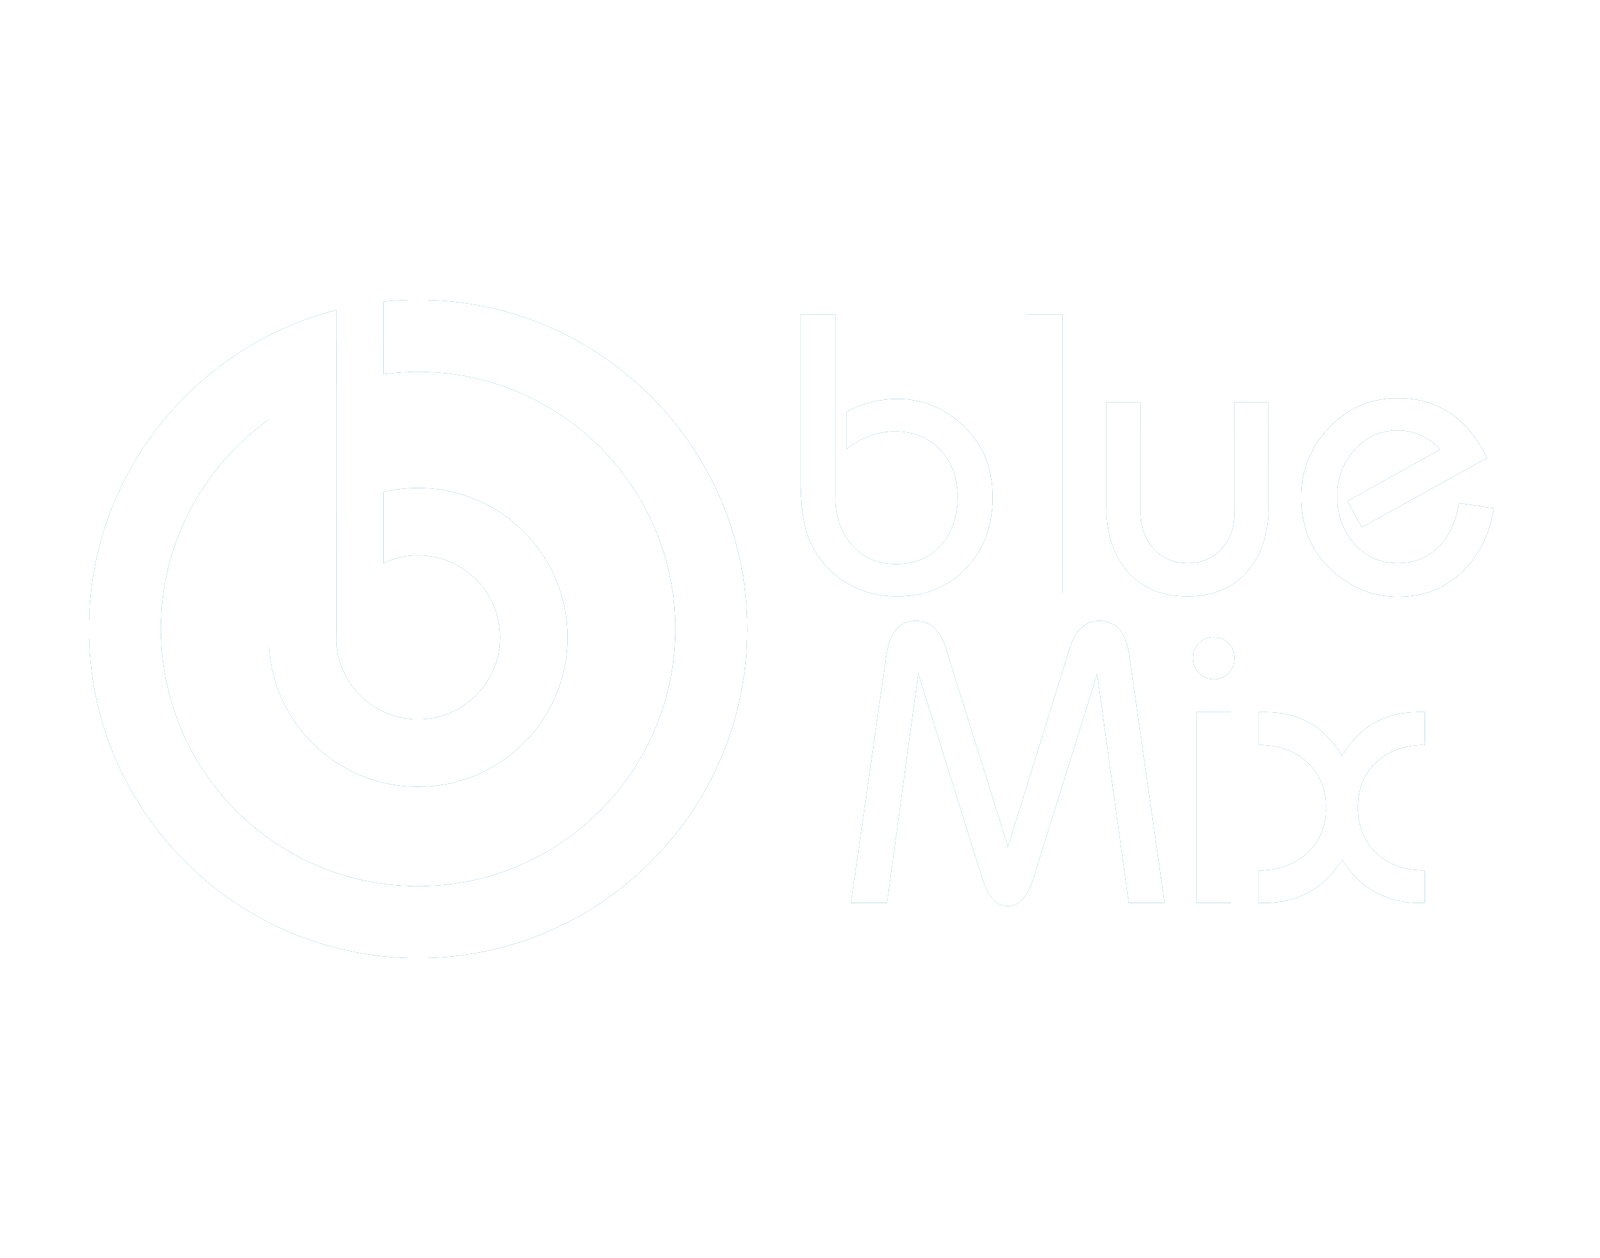 Blue Mix